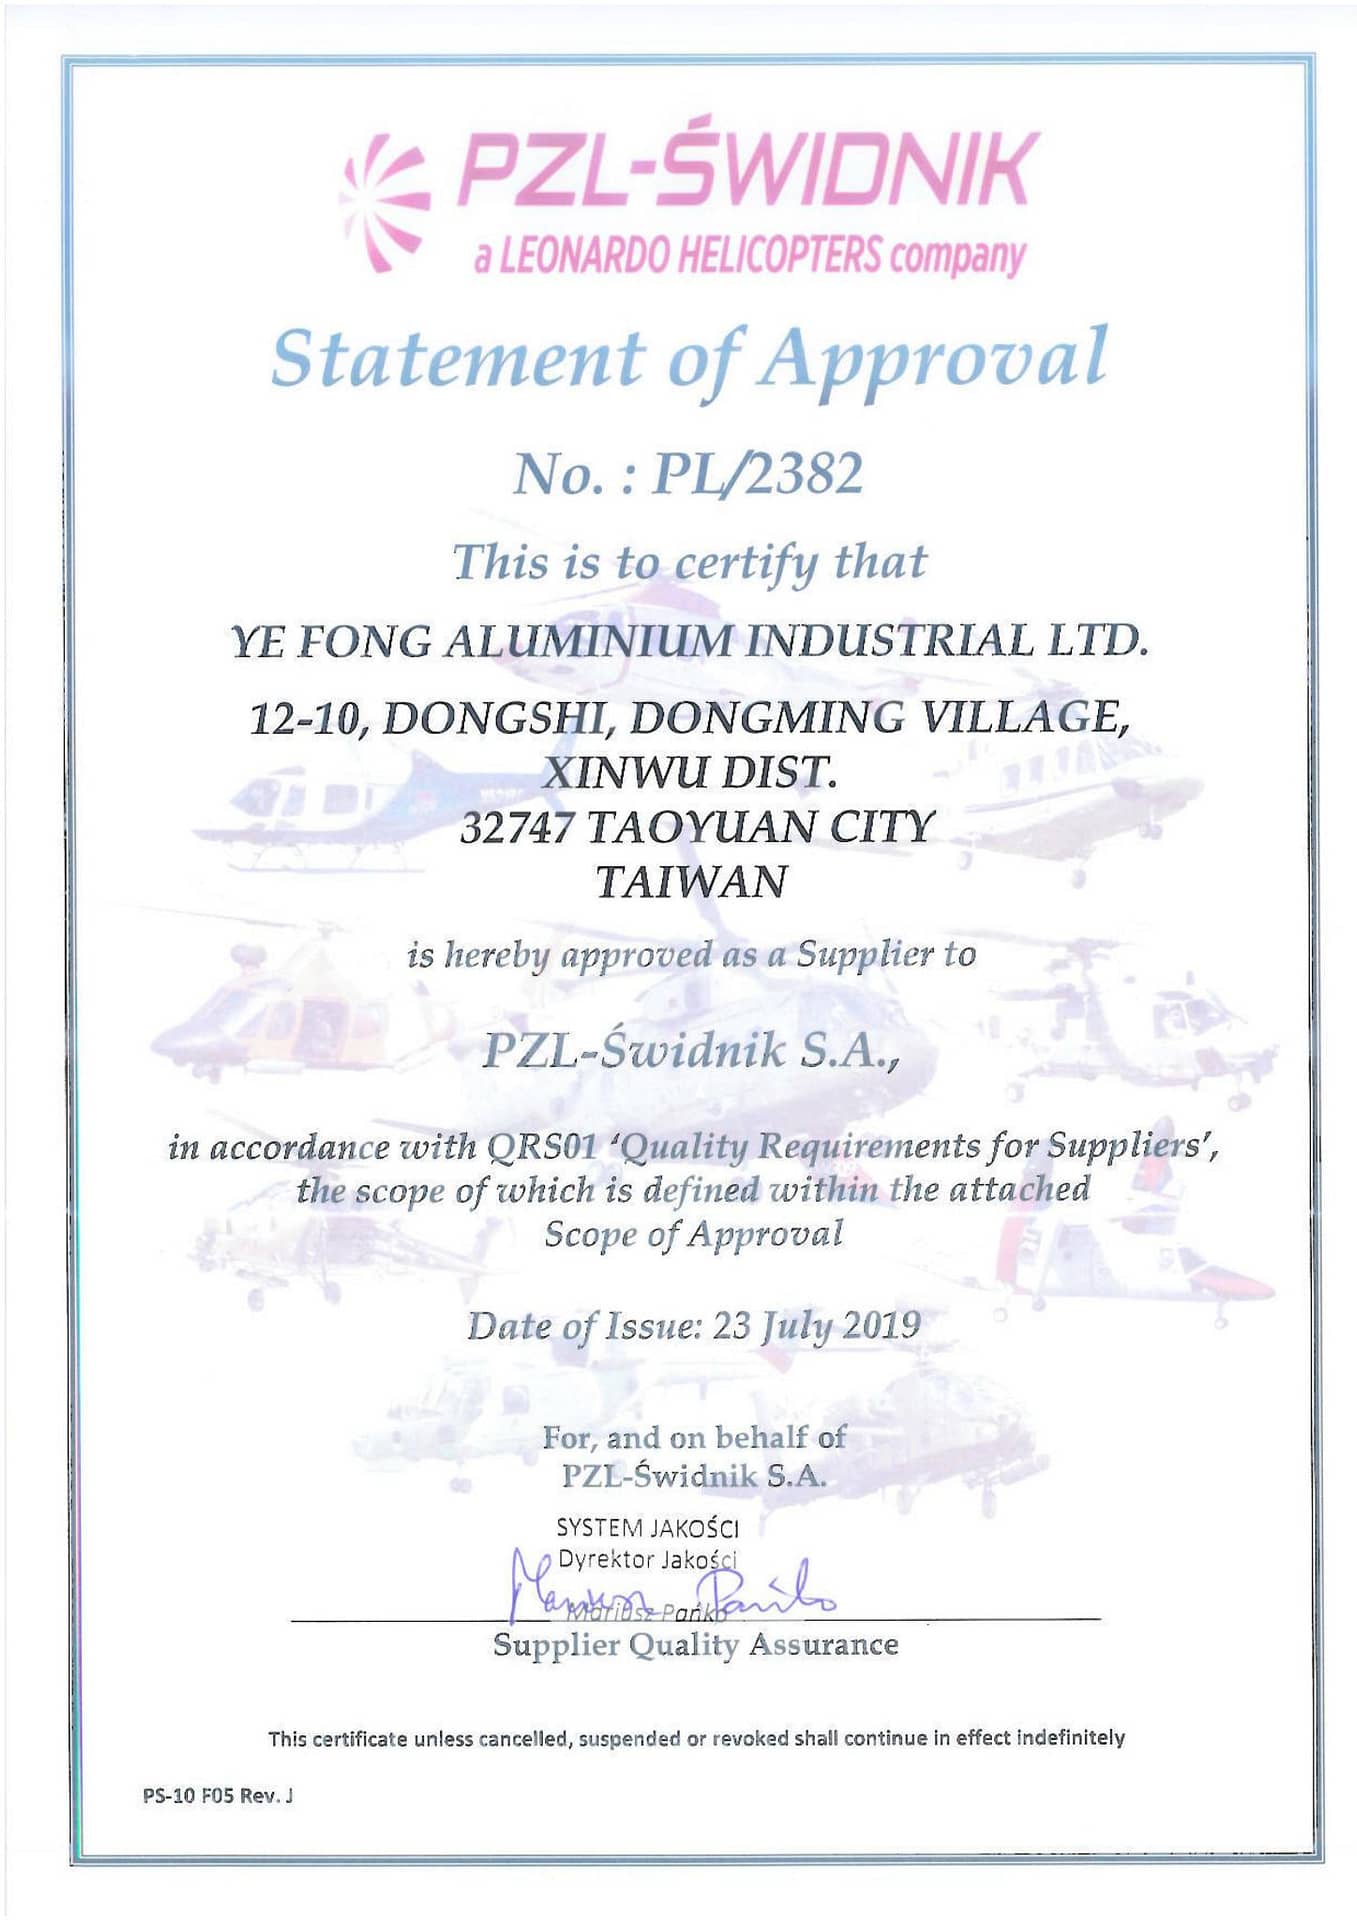 https:/ye-fong.com/wp-content/uploads/2020/06/Approved-supplier-certificate_LEONARDO-Helicopter.-1-scaled.jpg